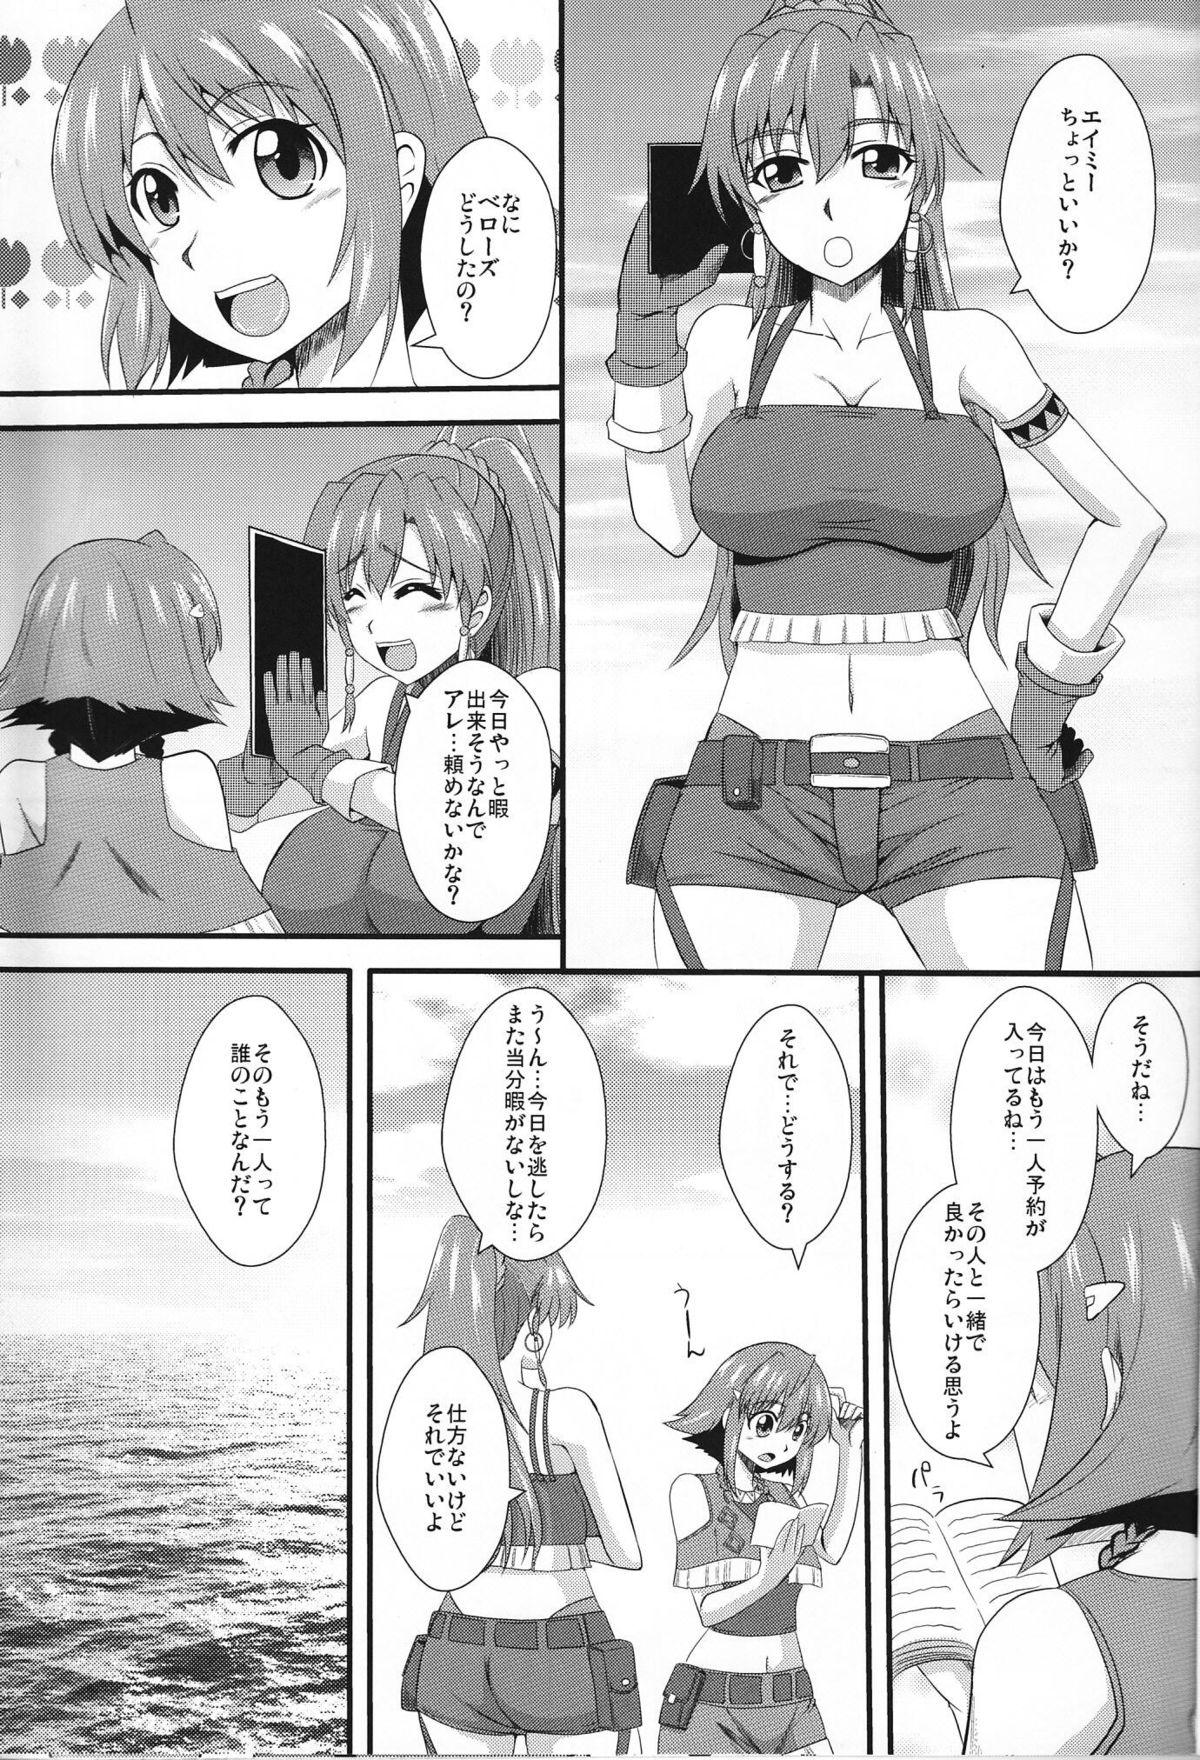 Twinkstudios Shoukan no Gargantia - Suisei no gargantia Climax - Page 2